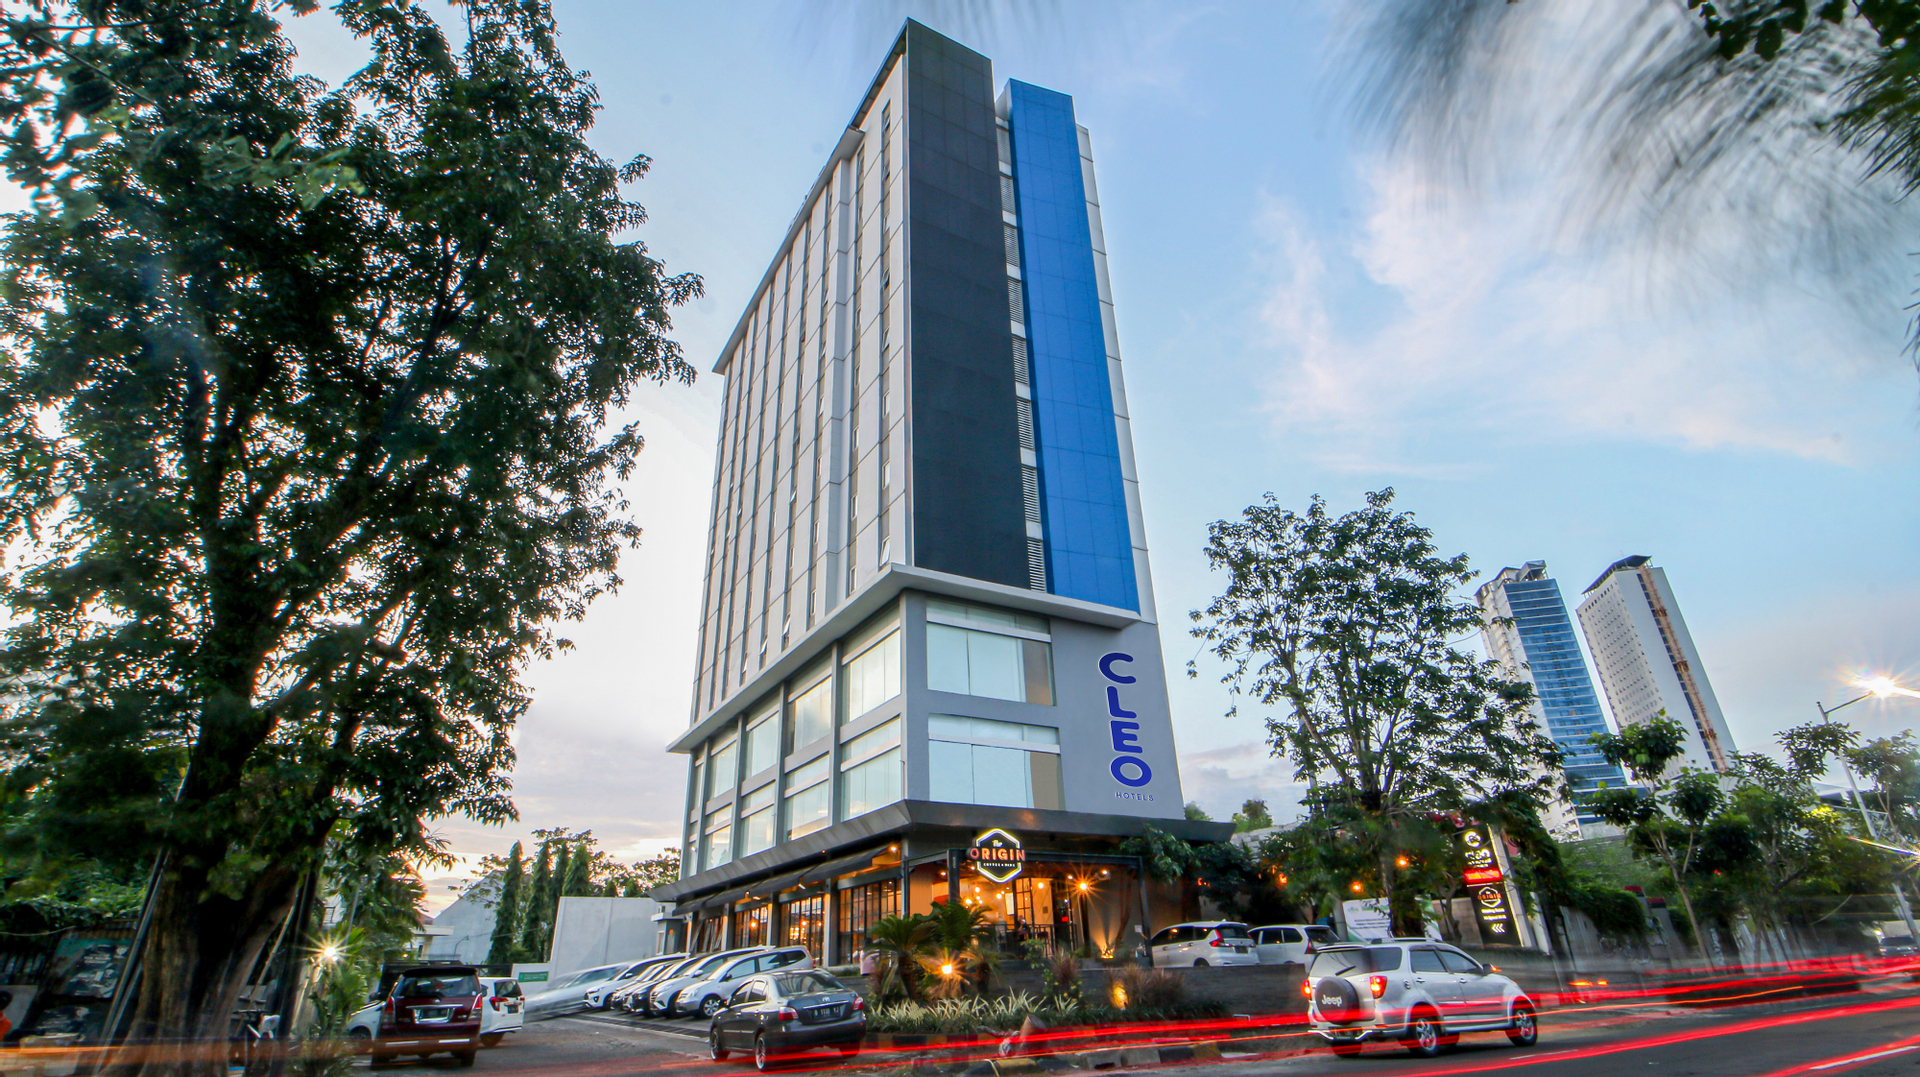 Exterior & Views 1, Cleo Hotel Jemursari, Surabaya